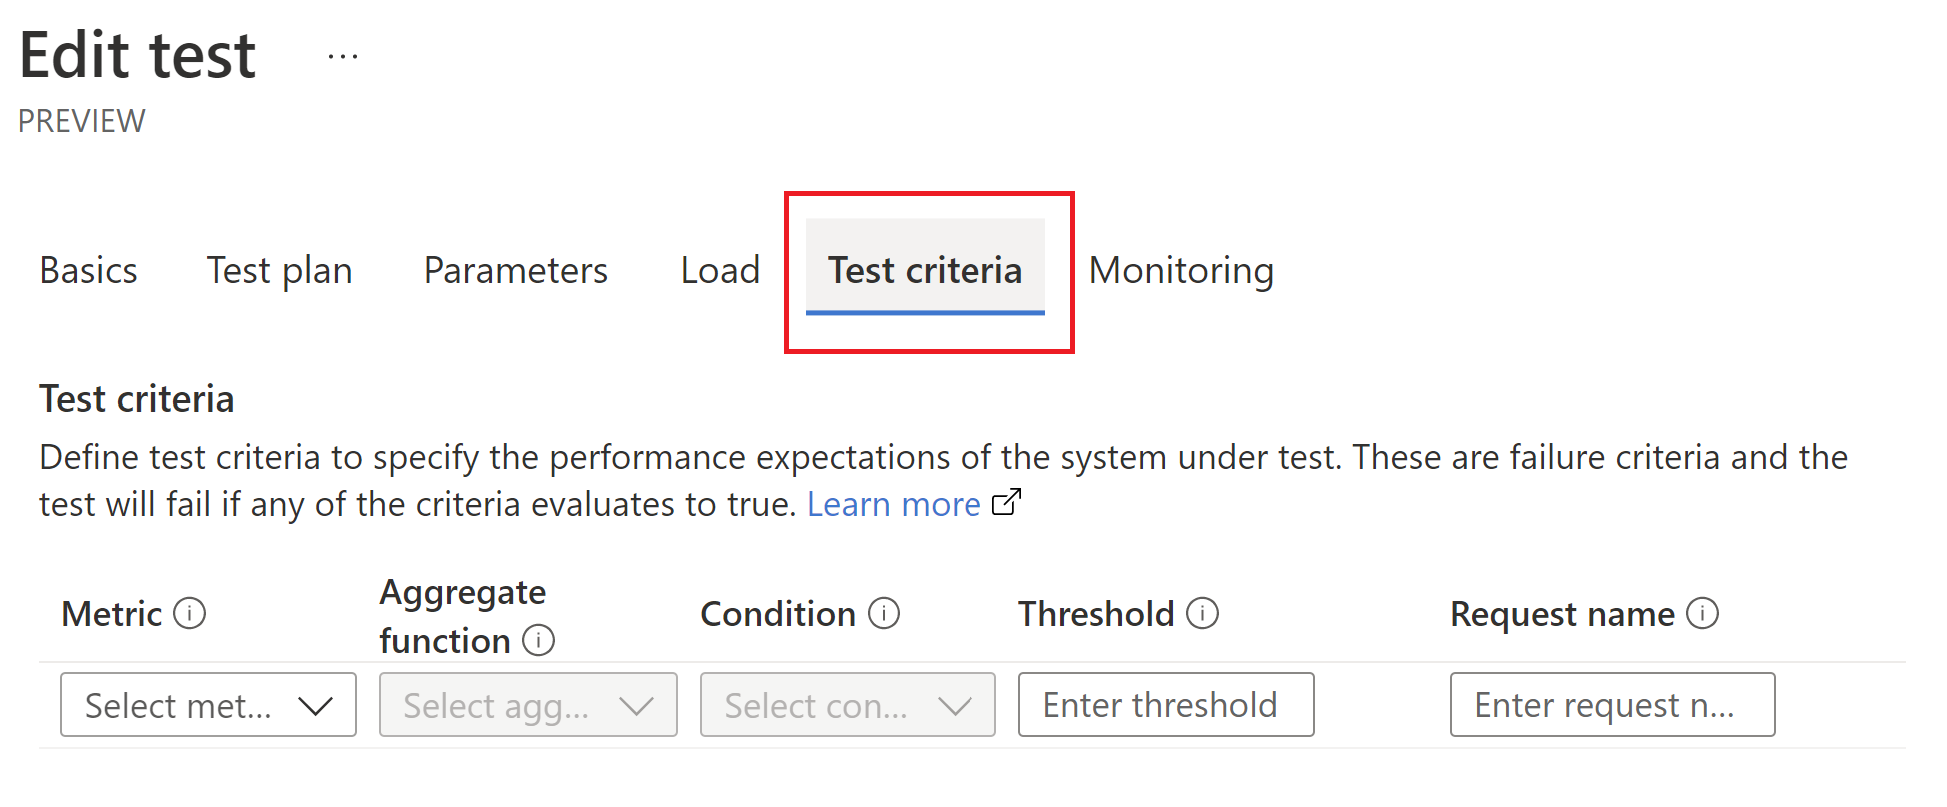 [Test criteria] タブと条件構成のペインが表示されたスクリーンショット。